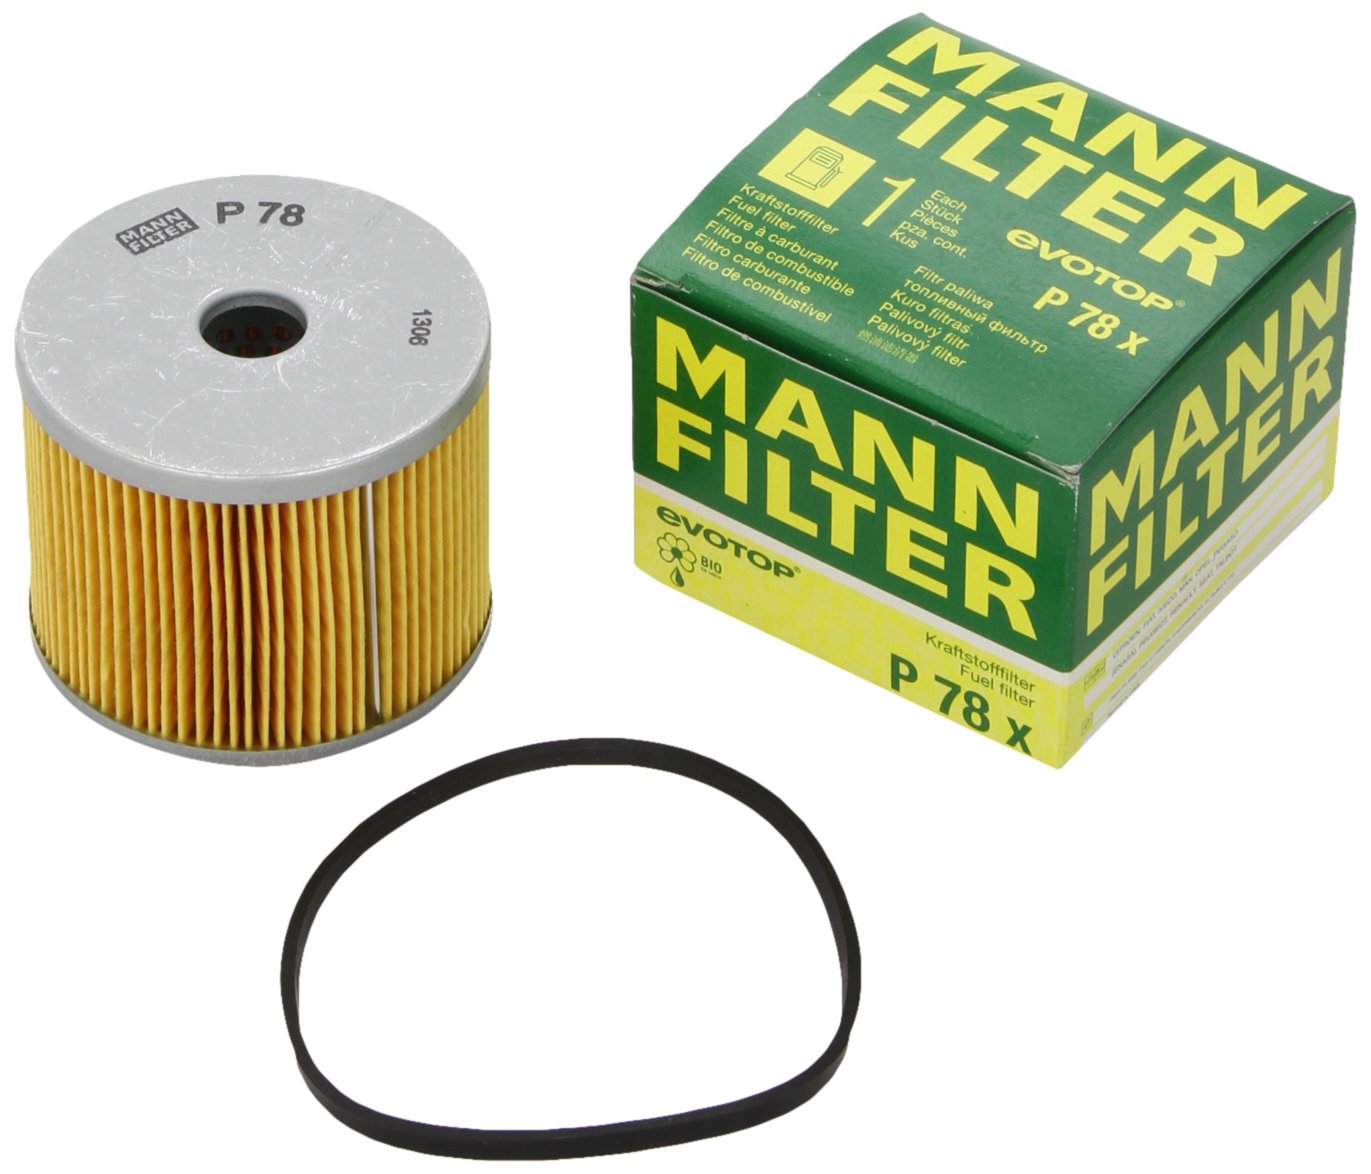 MANN-FILTER P 78 x - Kraftstofffilter Satz mit Dichtung / Dichtungssatz Kraftstofffilter – Für PKW von MANN-FILTER